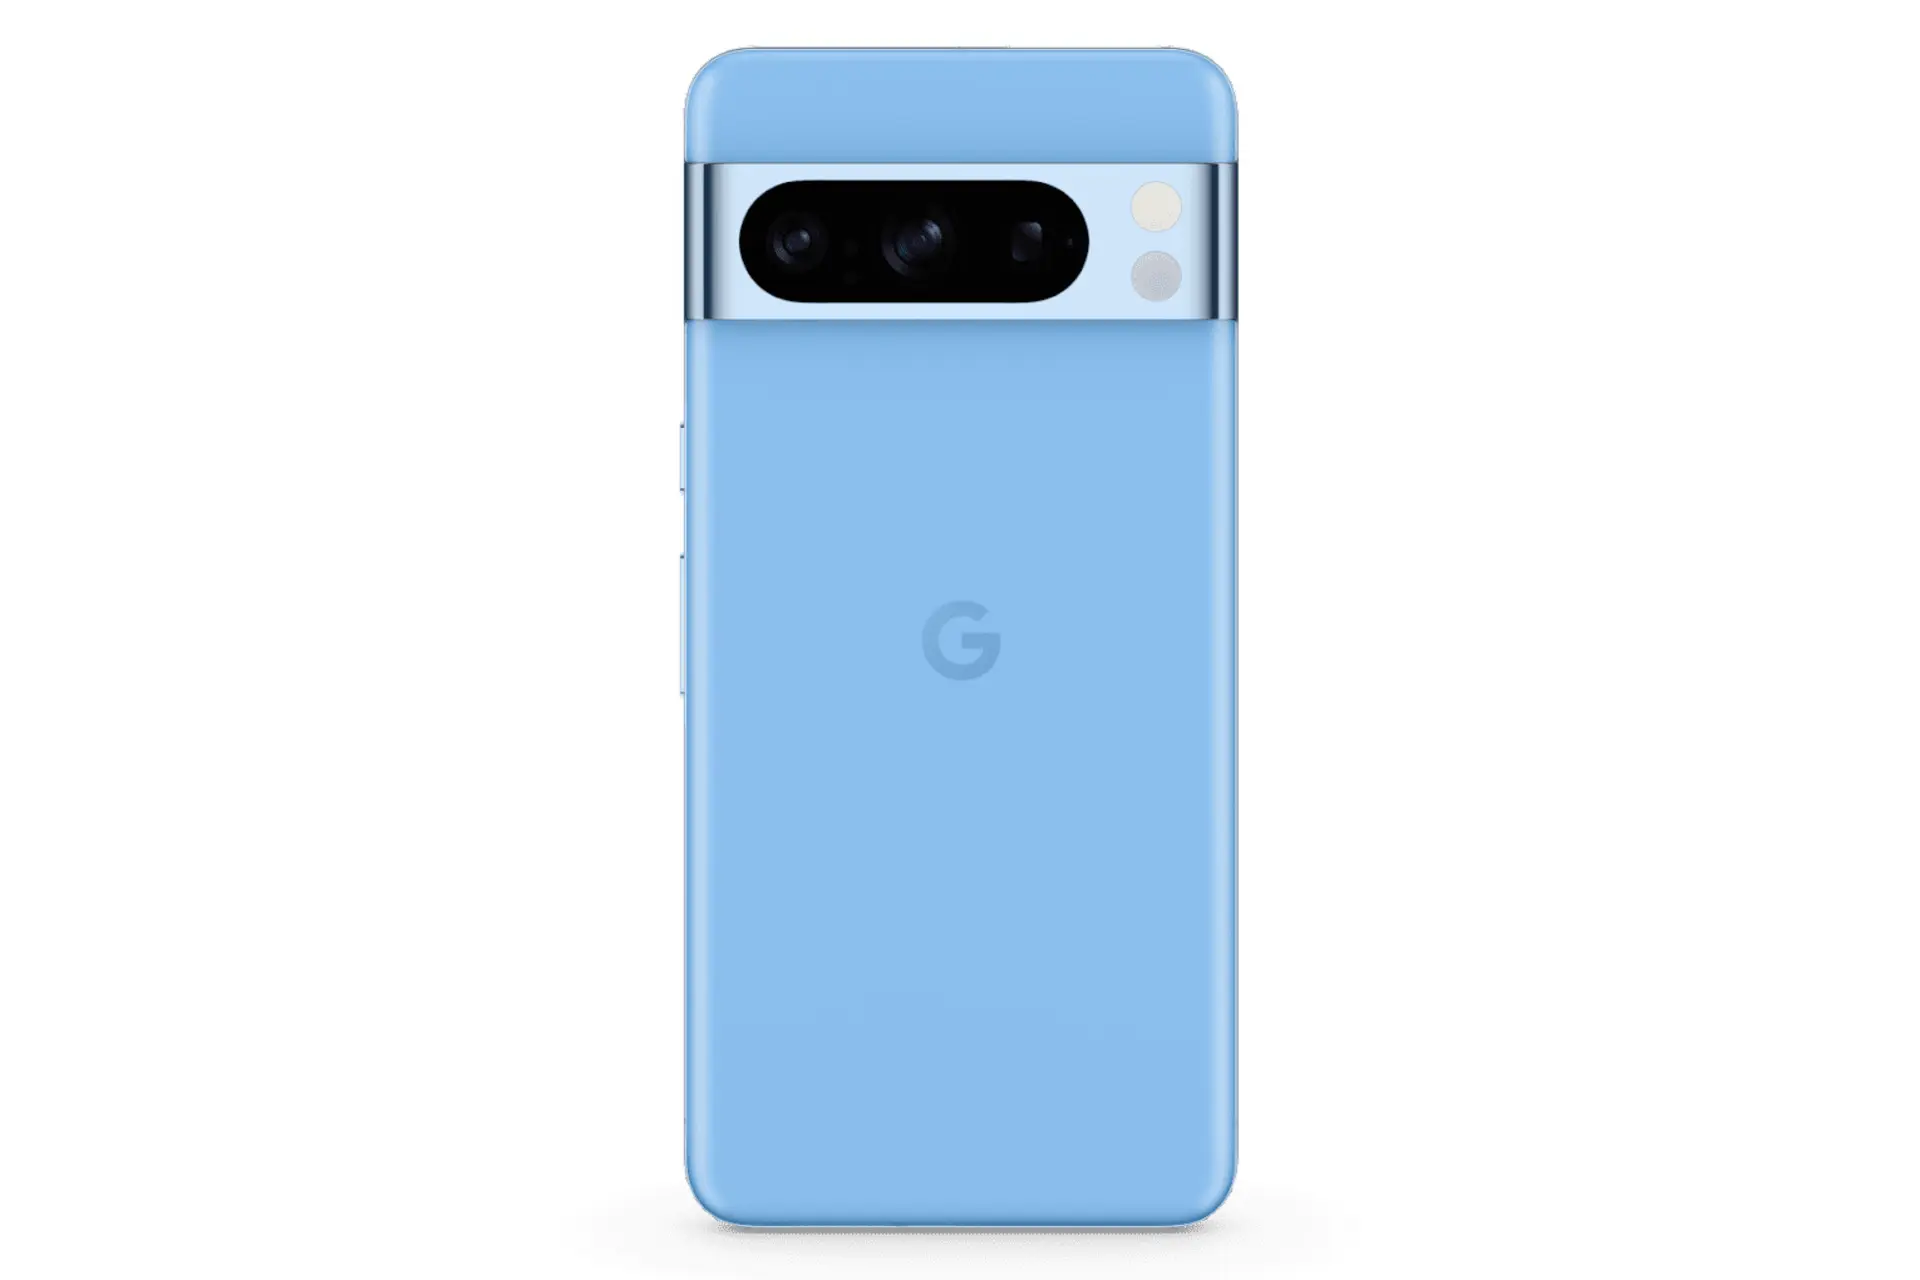 پنل پشت گوشی موبایل پیکسل 8 پرو گوگل / Google Pixel 8 Pro آبی